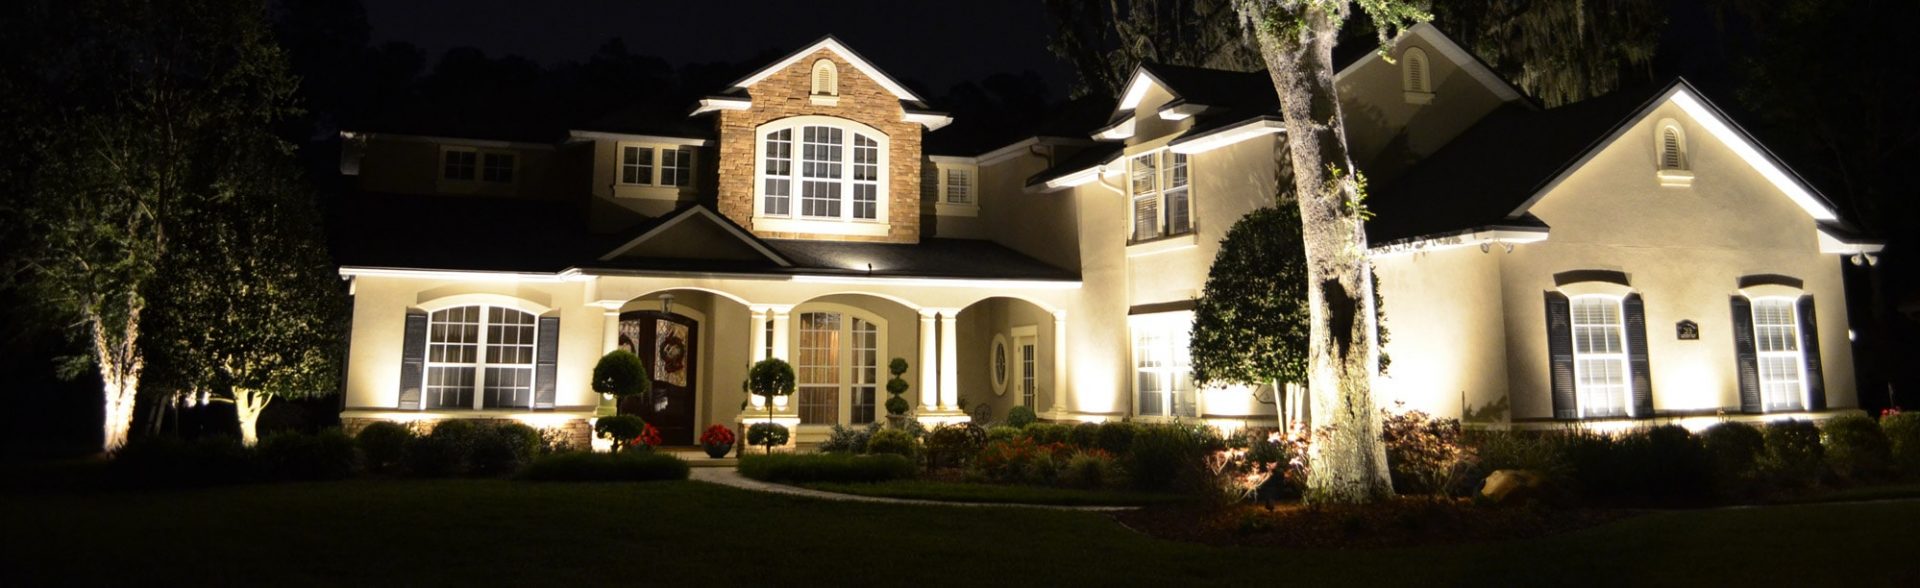 Home with yard lighting